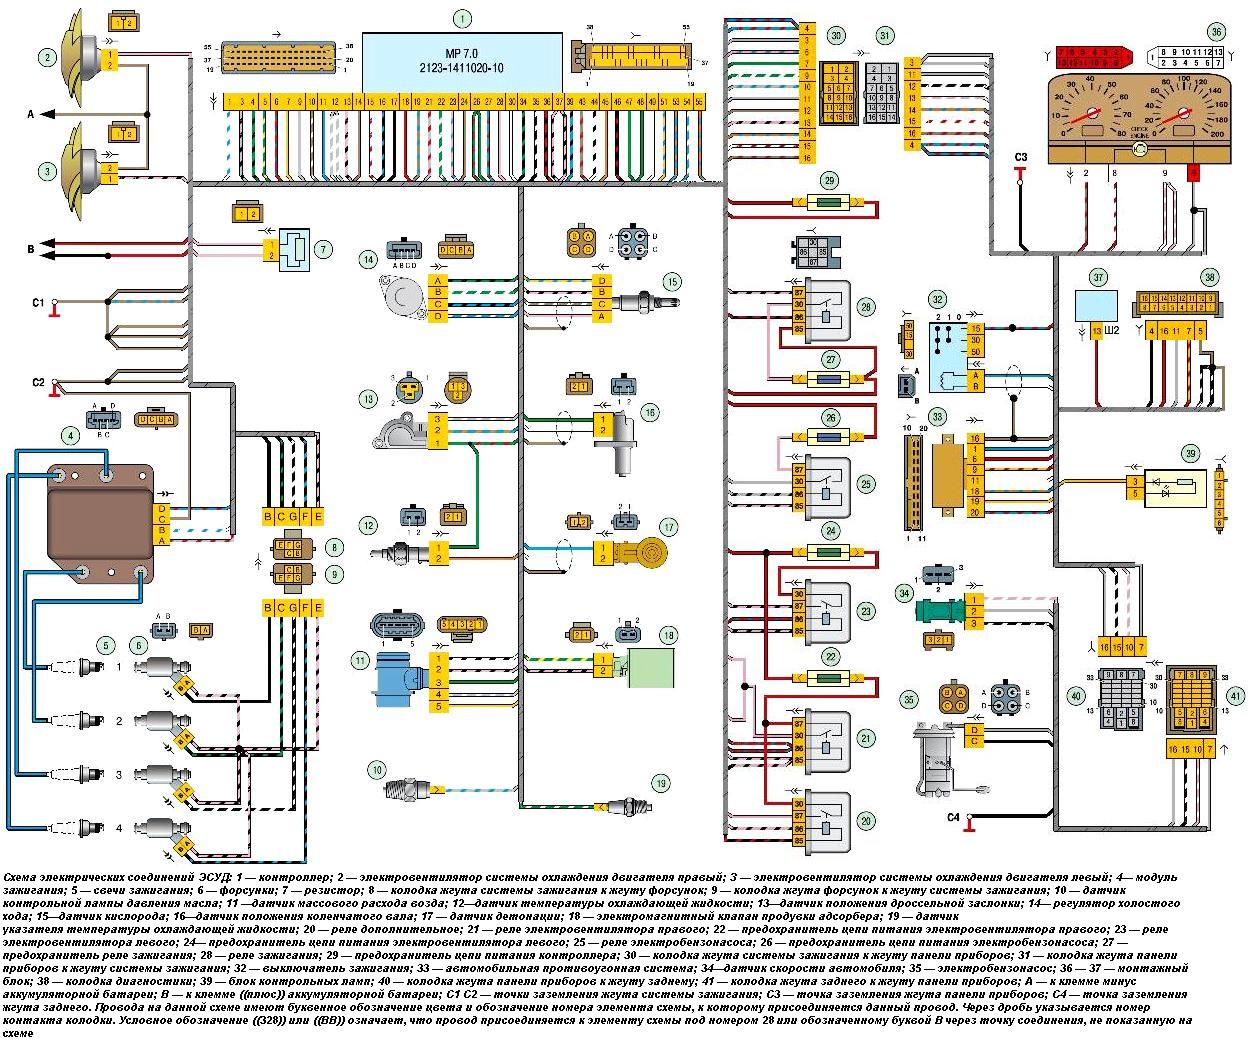 Схема электрических соединений ЭСУД